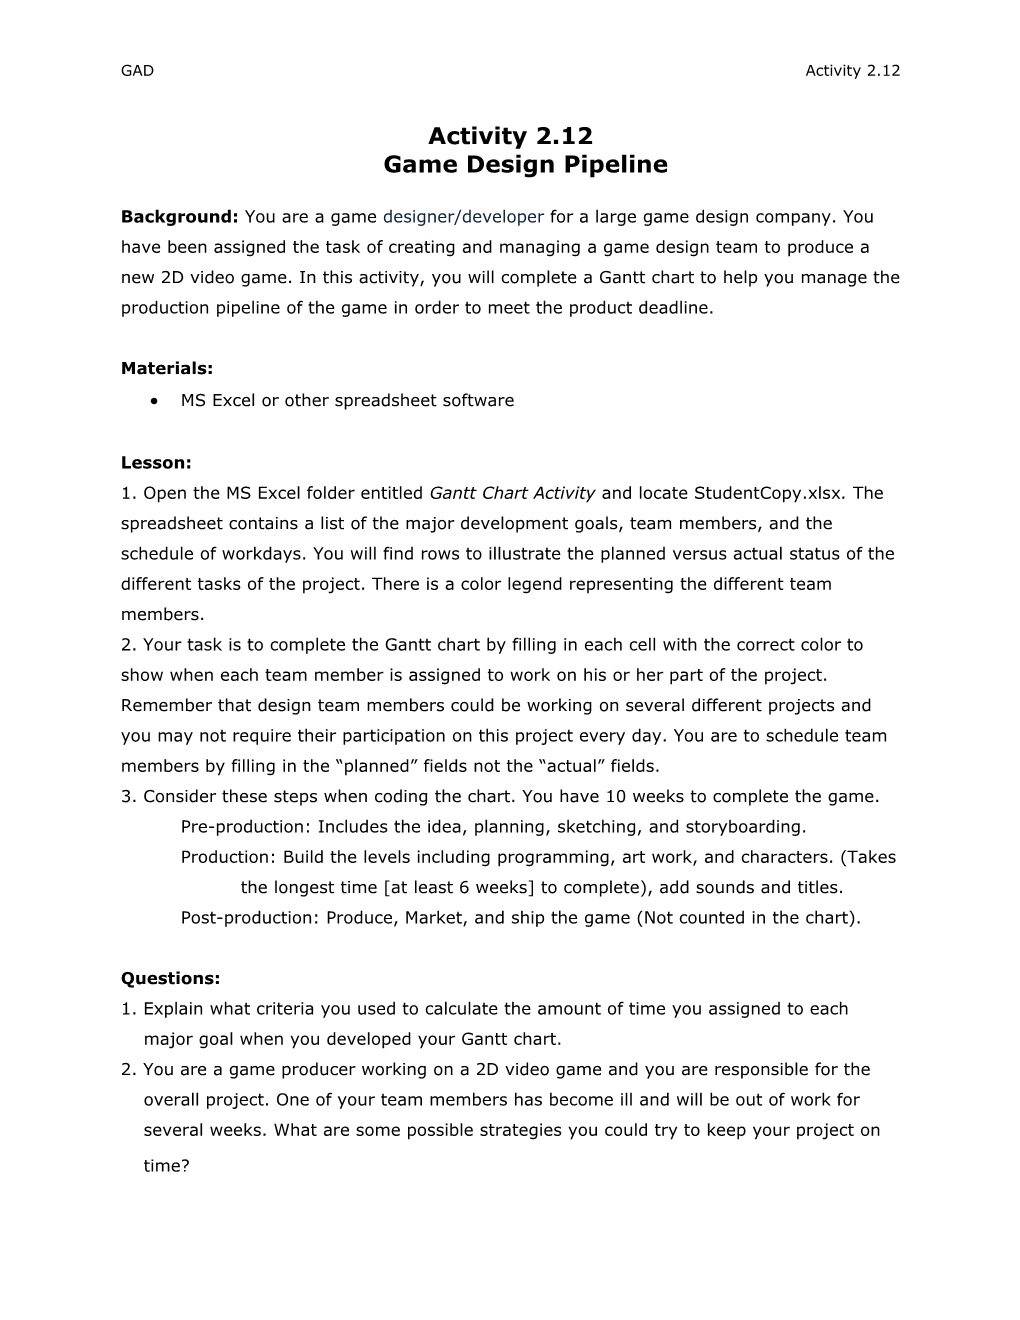 Game Design Pipeline